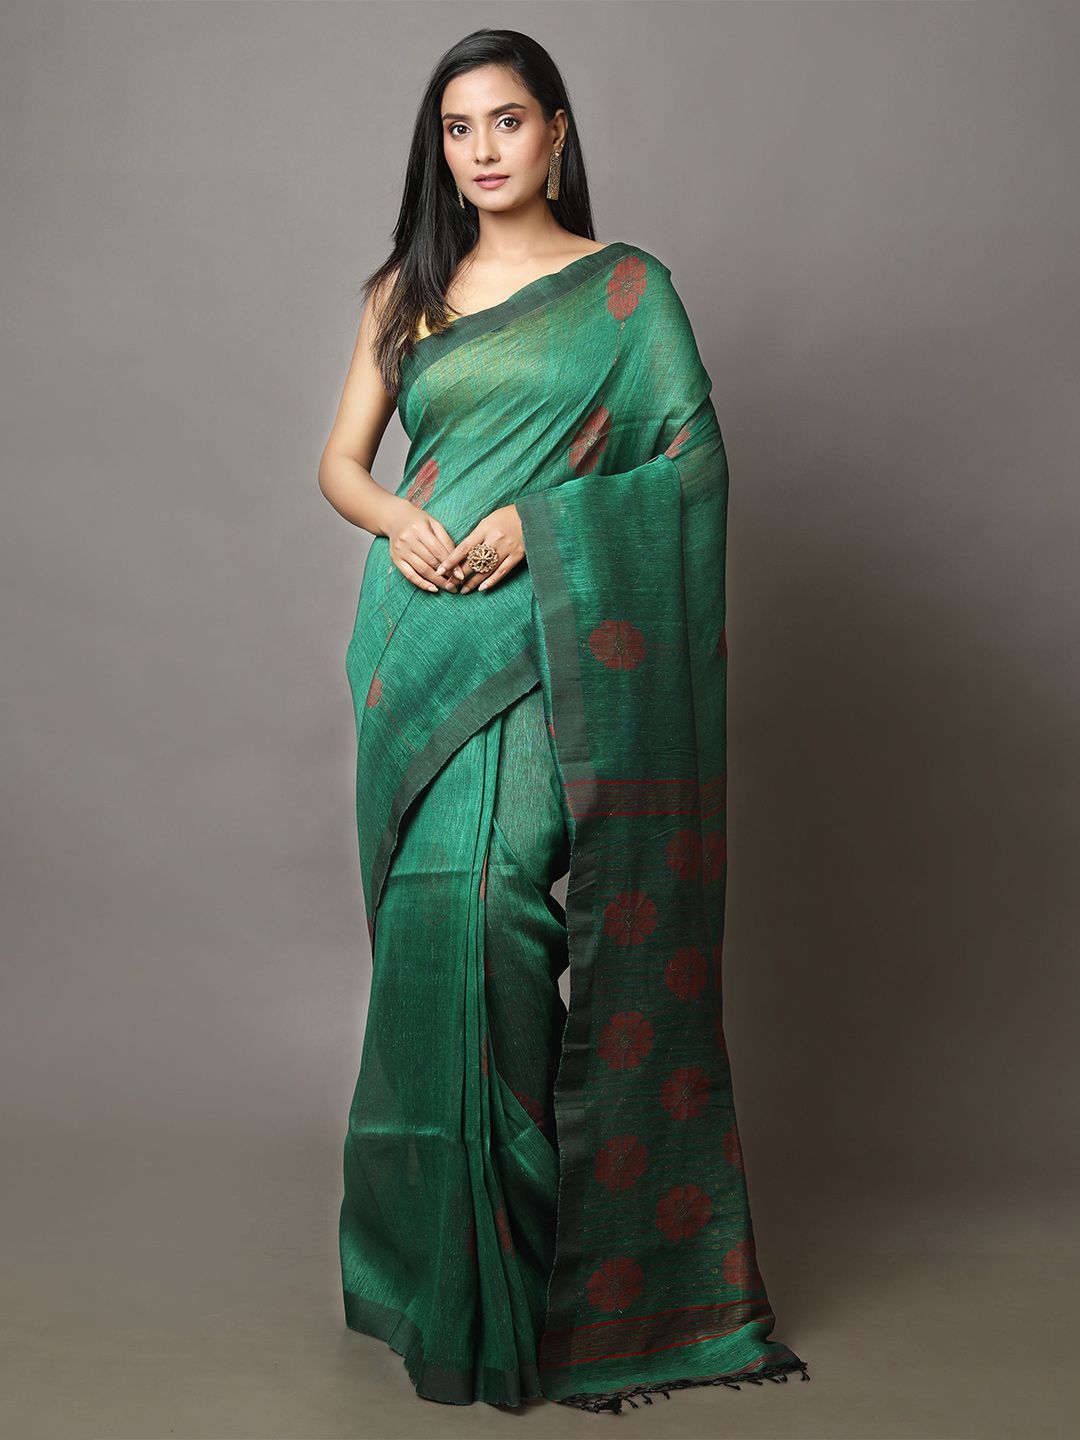 Arhi Green & Brown Woven Design Pure Linen Saree Price in India